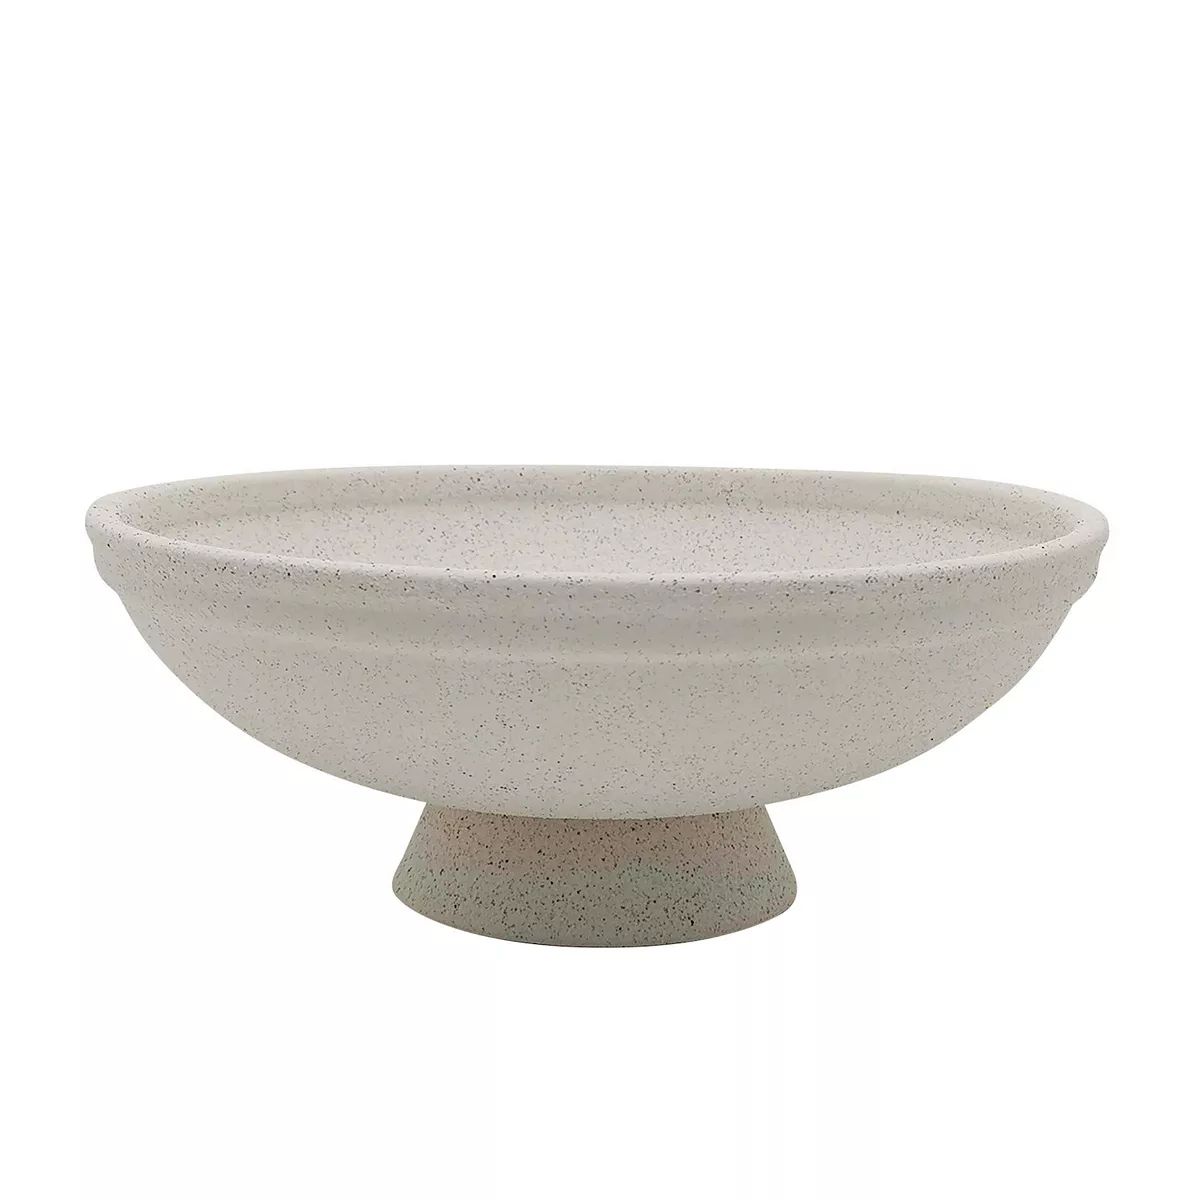 Sonoma Goods For Life® Neutral Speckled Decorative Bowl Table Decor | Kohl's